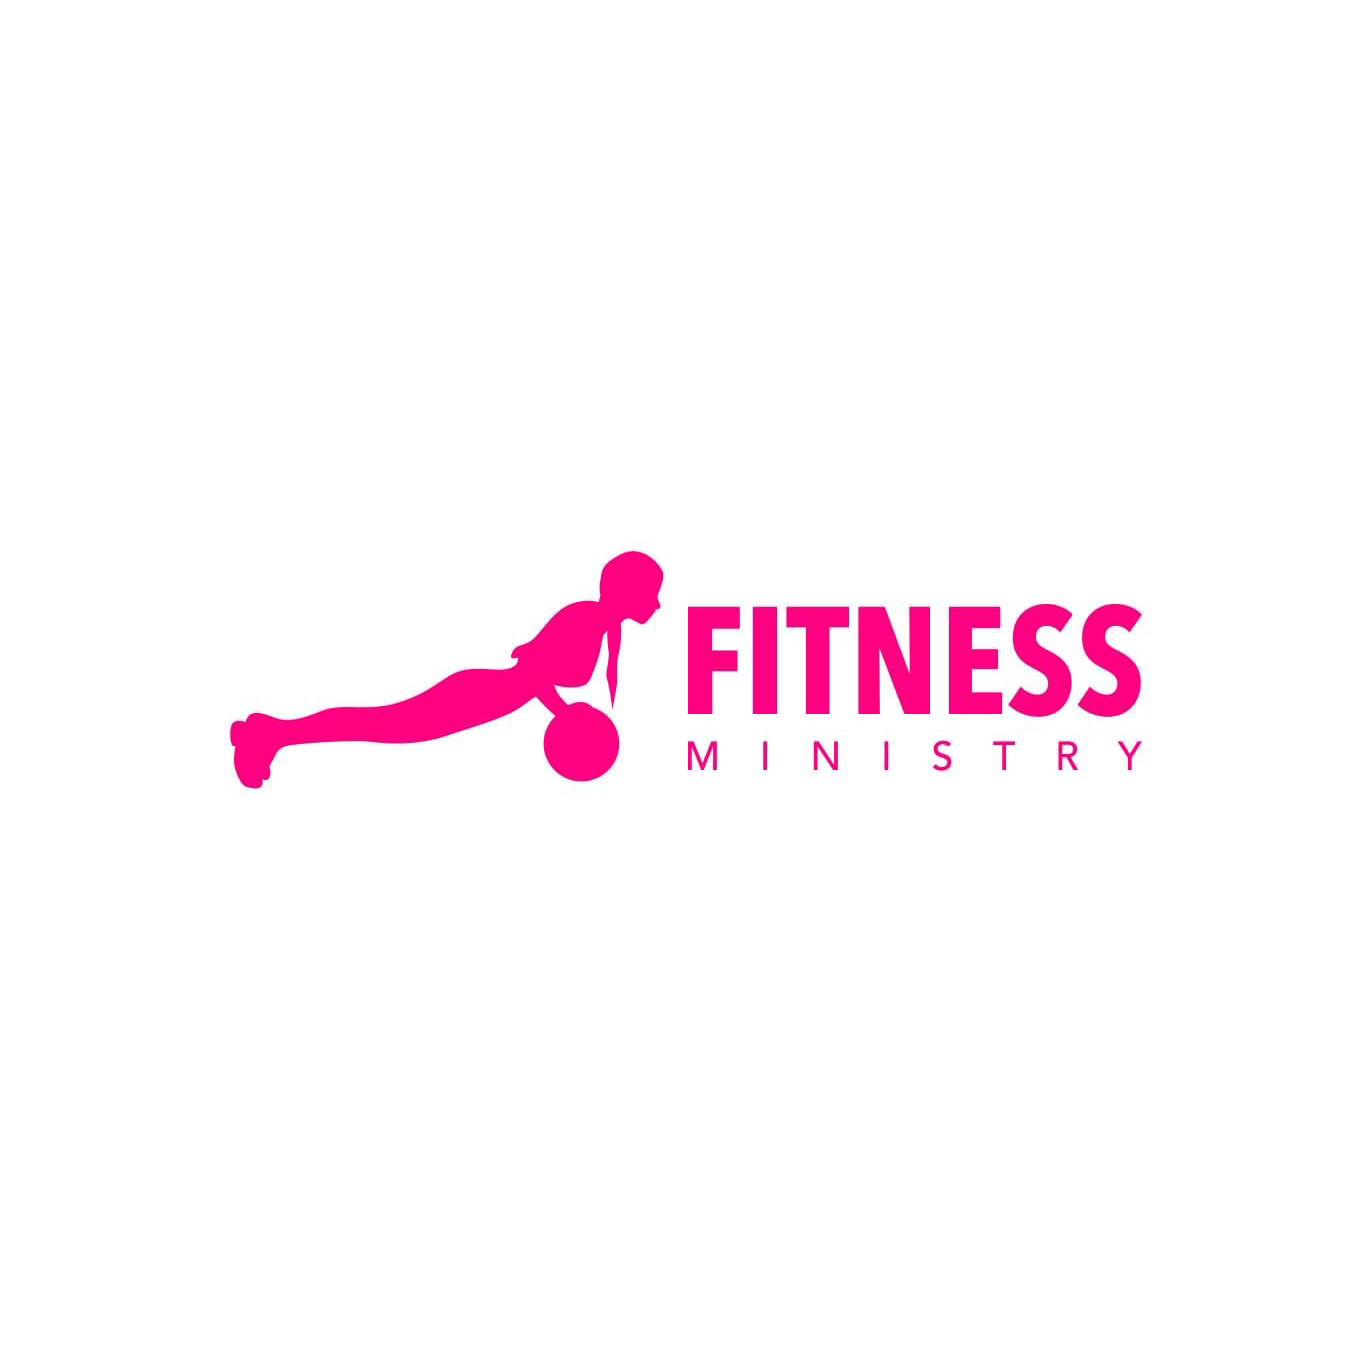 Fitness Ministry logo